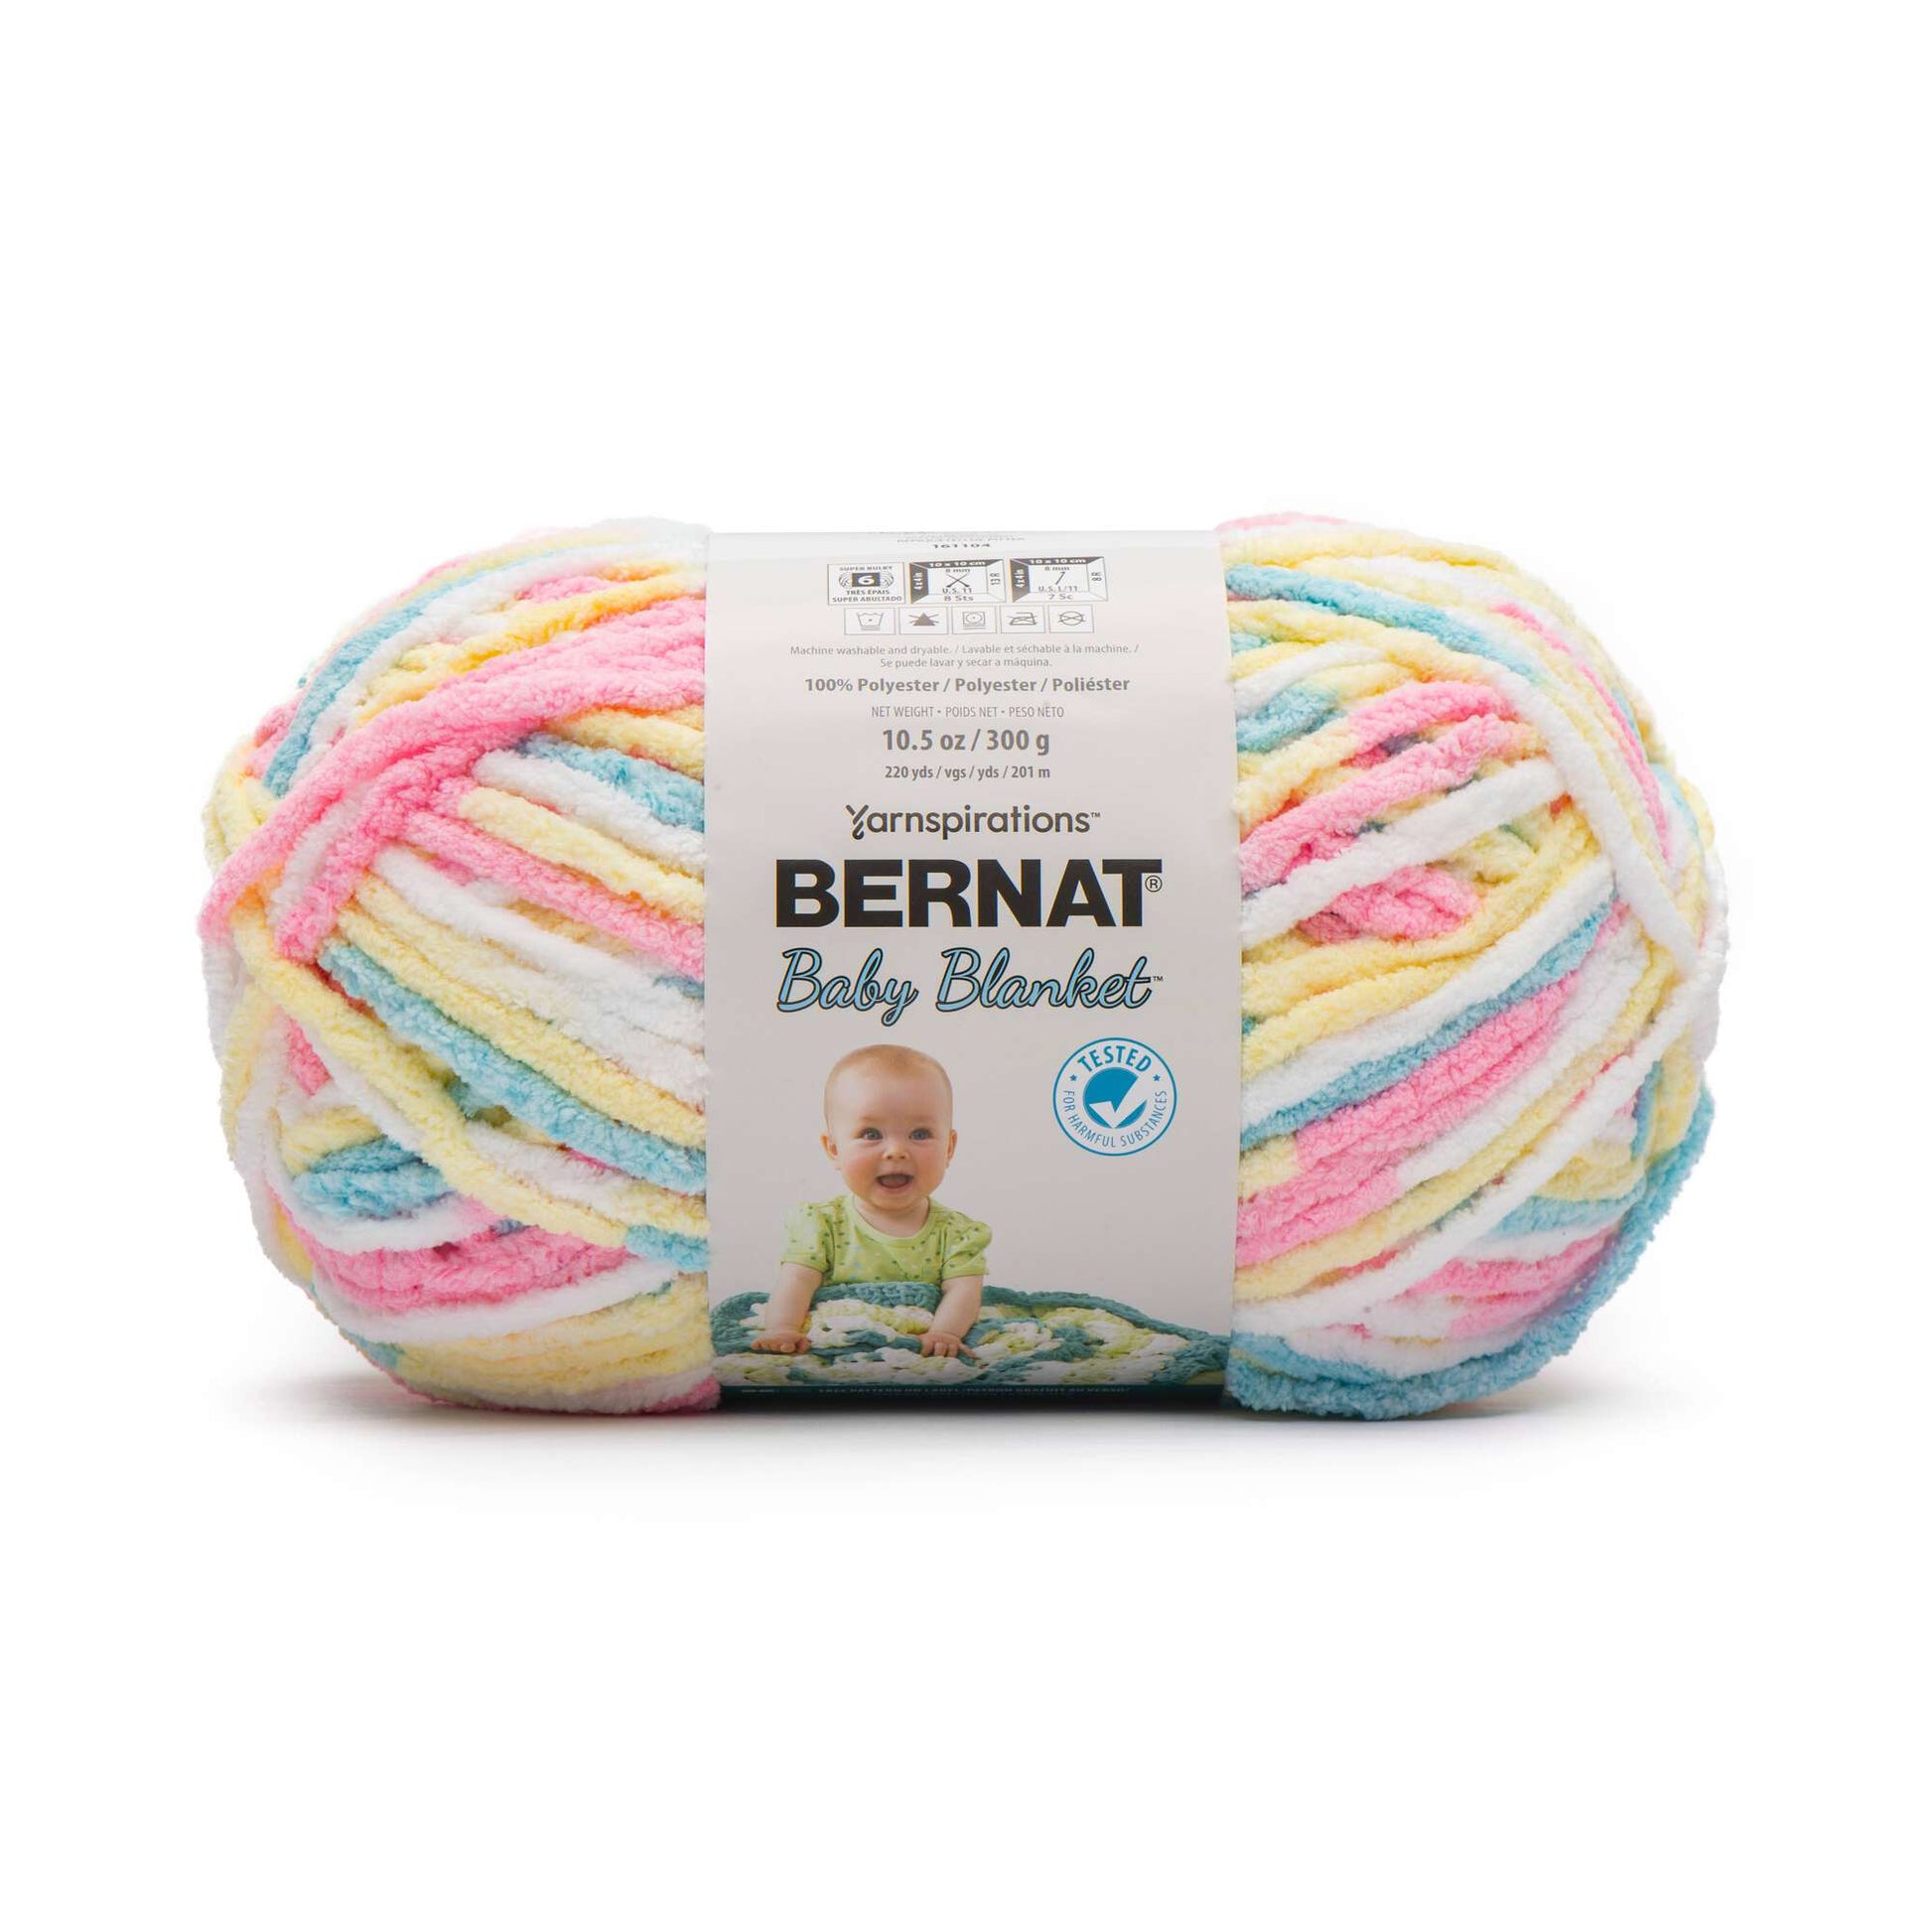 Bernat Baby Blanket Yarn Colour 04305 Pink/blue 300 Grams/10.5 Ounces 220  Yards 6 Super Bulky knitting, Crochet 